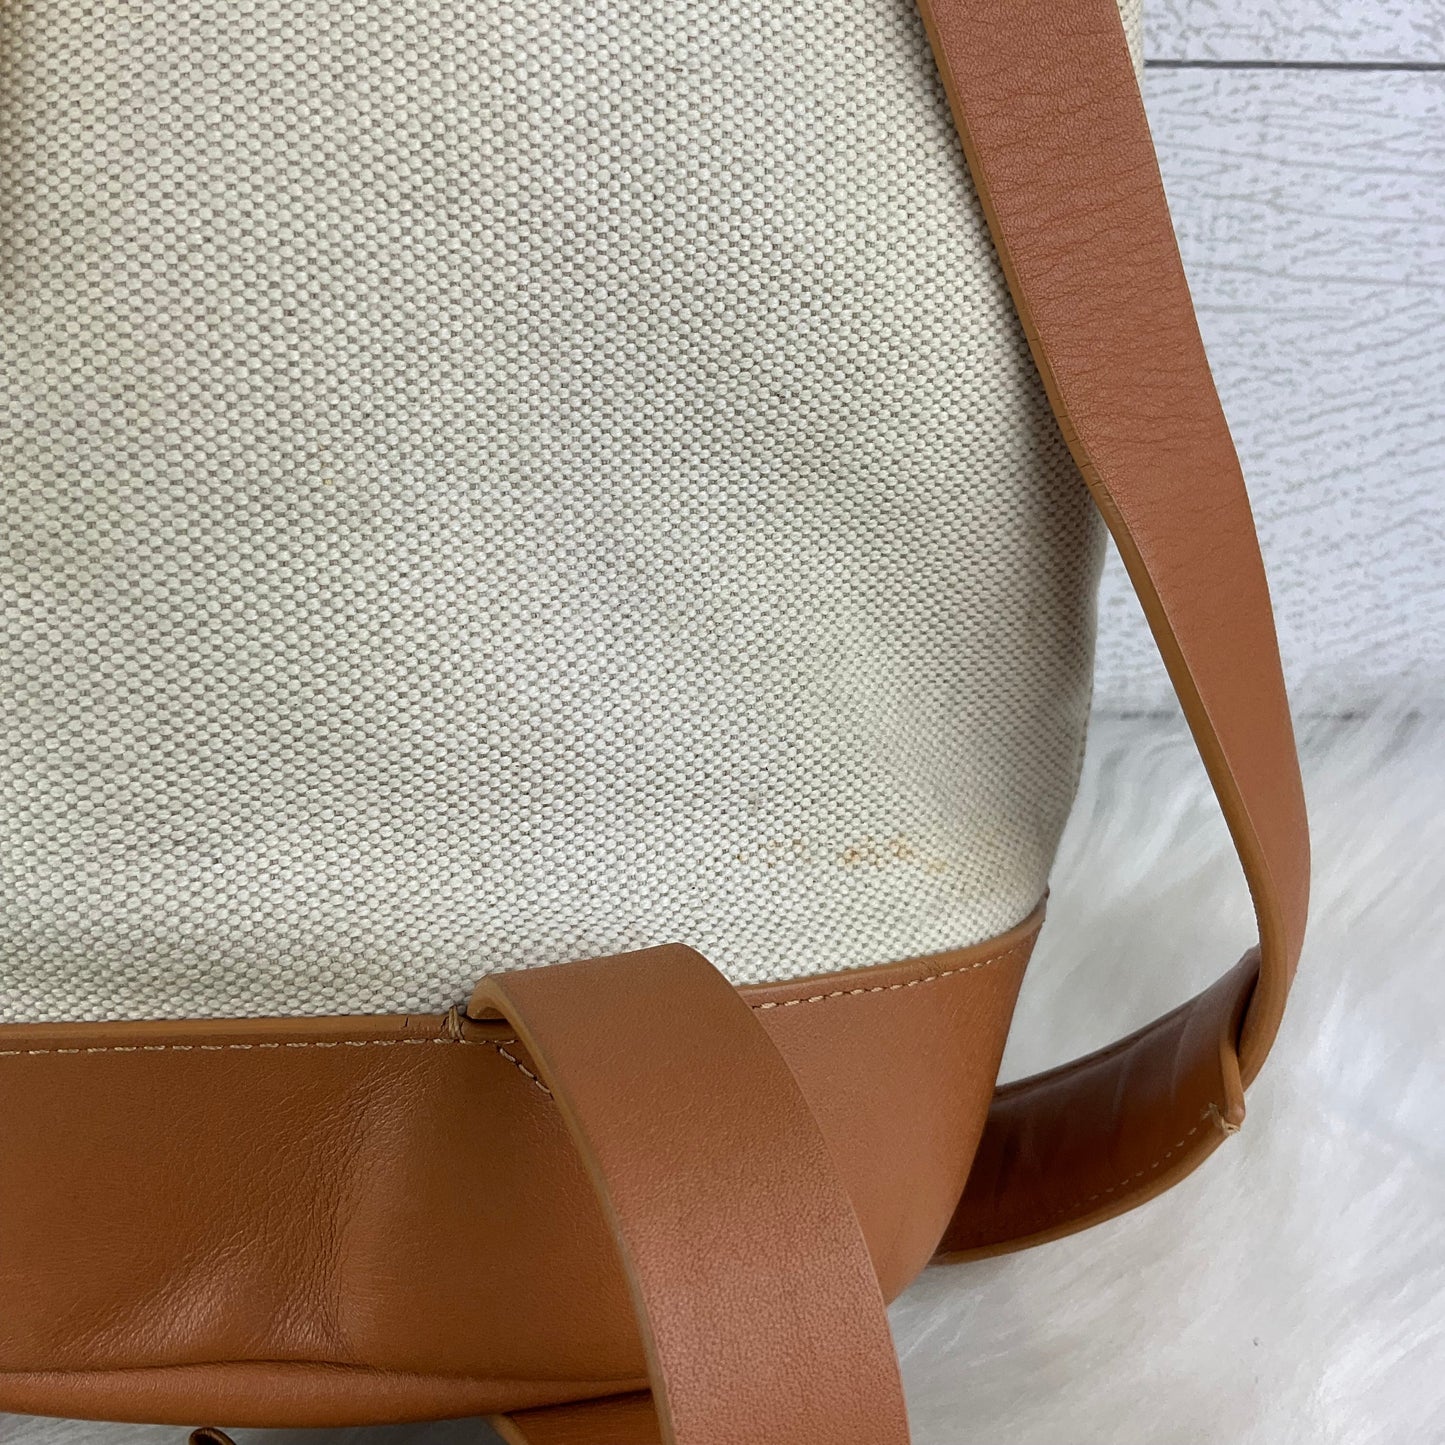 Backpack Designer By Cole-haan  Size: Medium